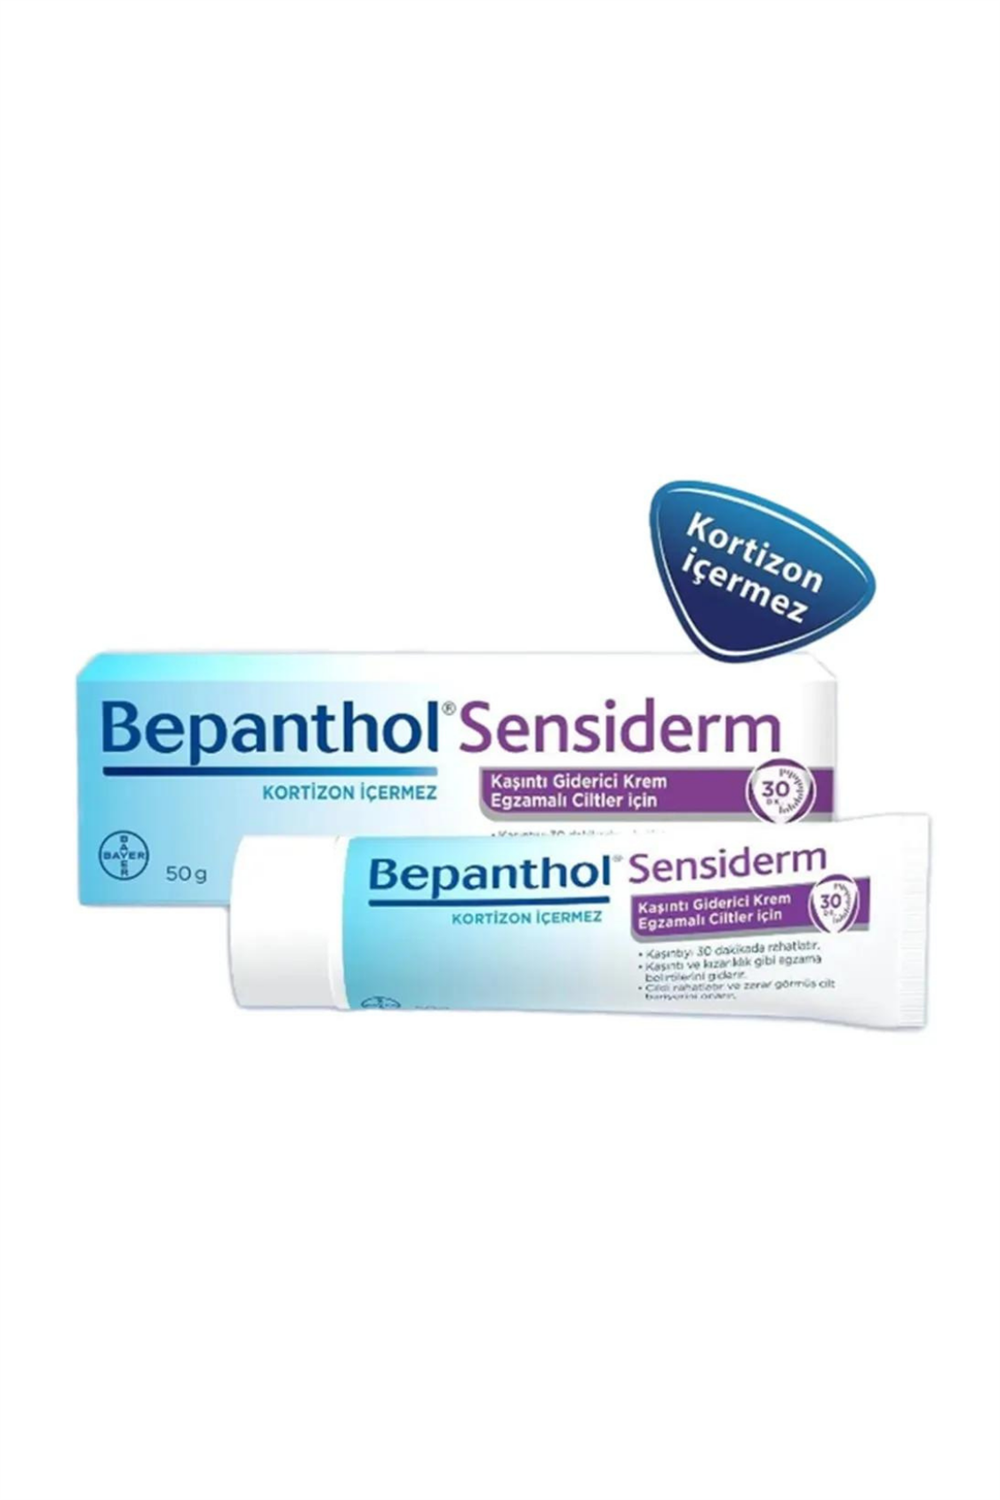 Bepanthol Sensiderm Anti-itch Cream 50 gr-LeylekKapida.com